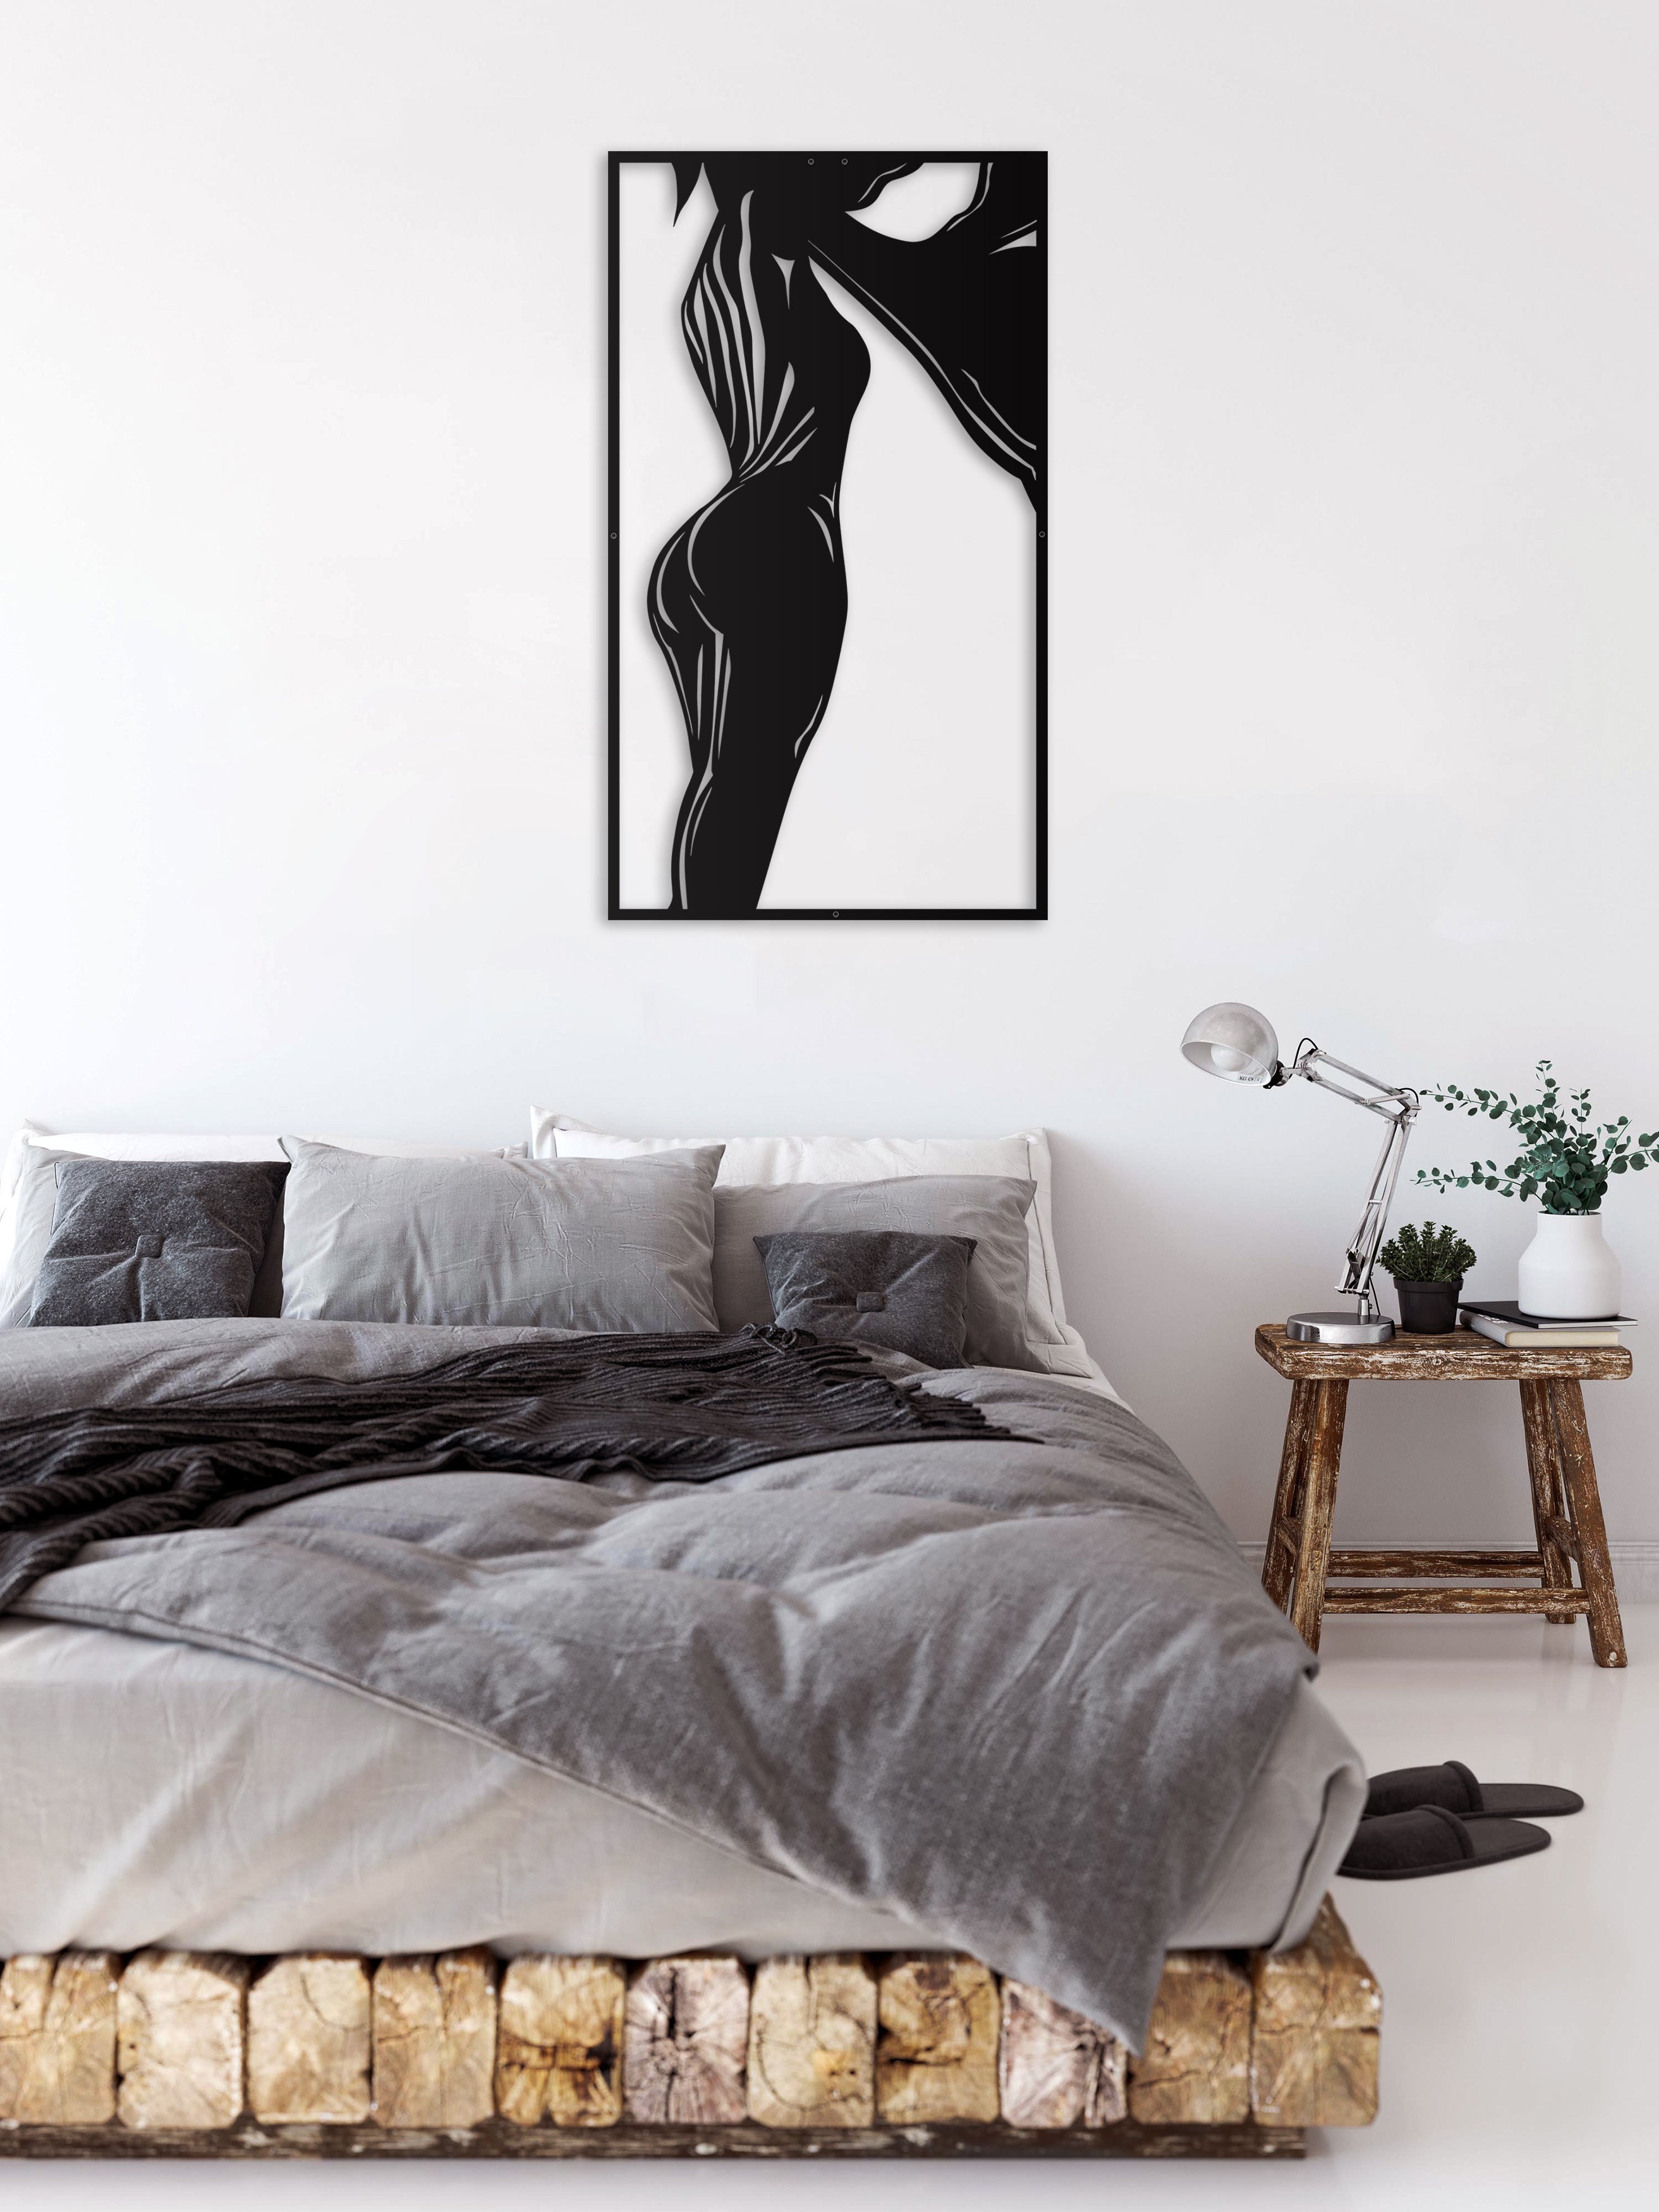 Nude Woman Oversize Wall Decor/ Living Room Wall Decor Anniversary Gift New Home Gift Wedding Gift